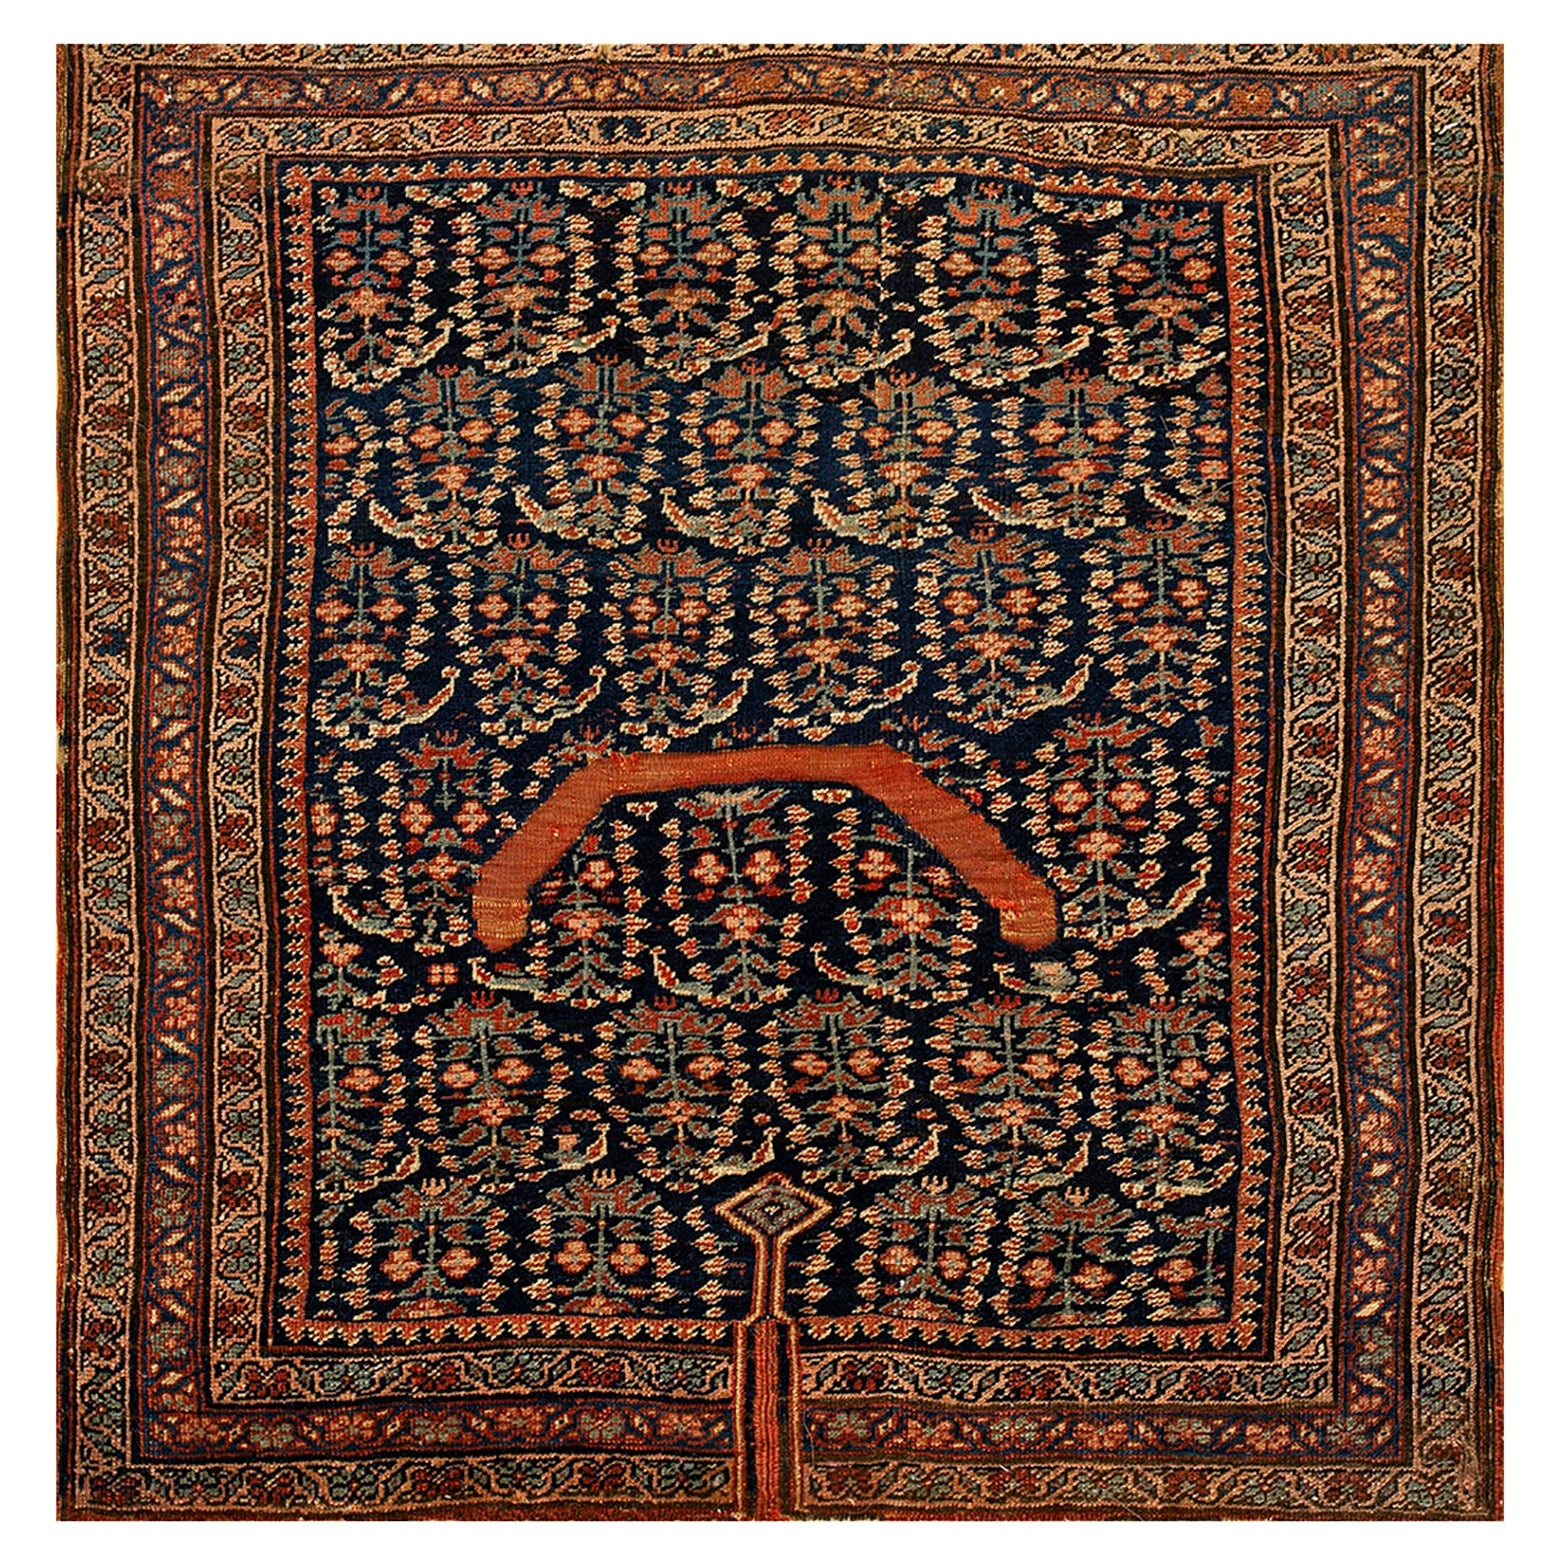 19th Century Persian Afshar Saddle Carpet ( 3'2" x 3'4" - 97 x 102 cm ) For Sale